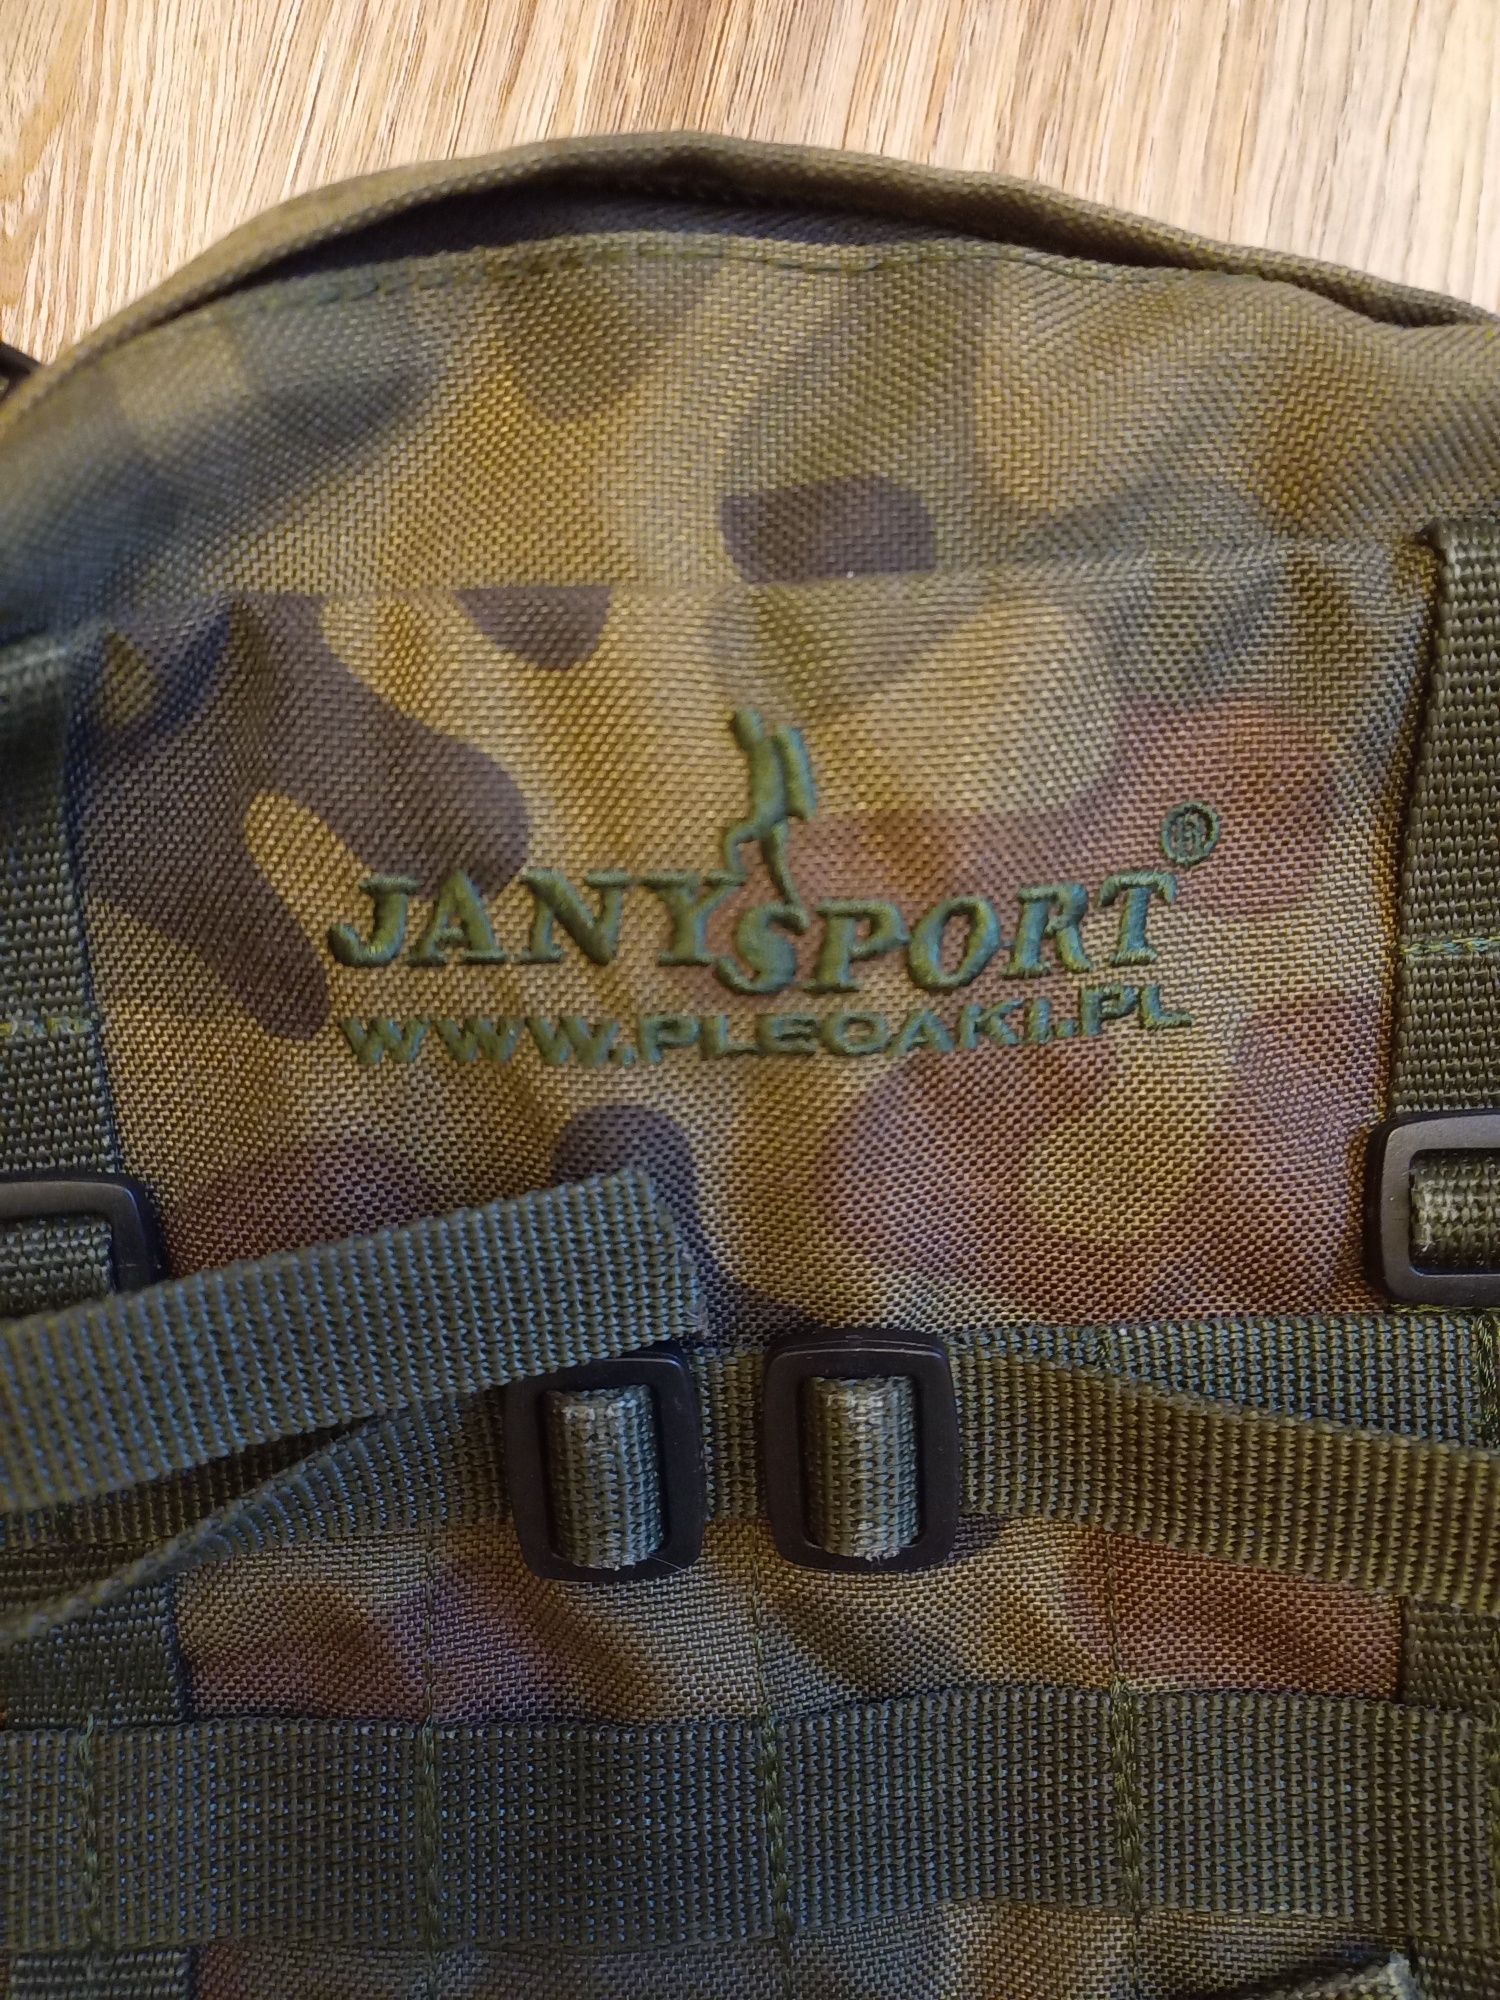 Plecak patrolowy JanySport GROT PP25